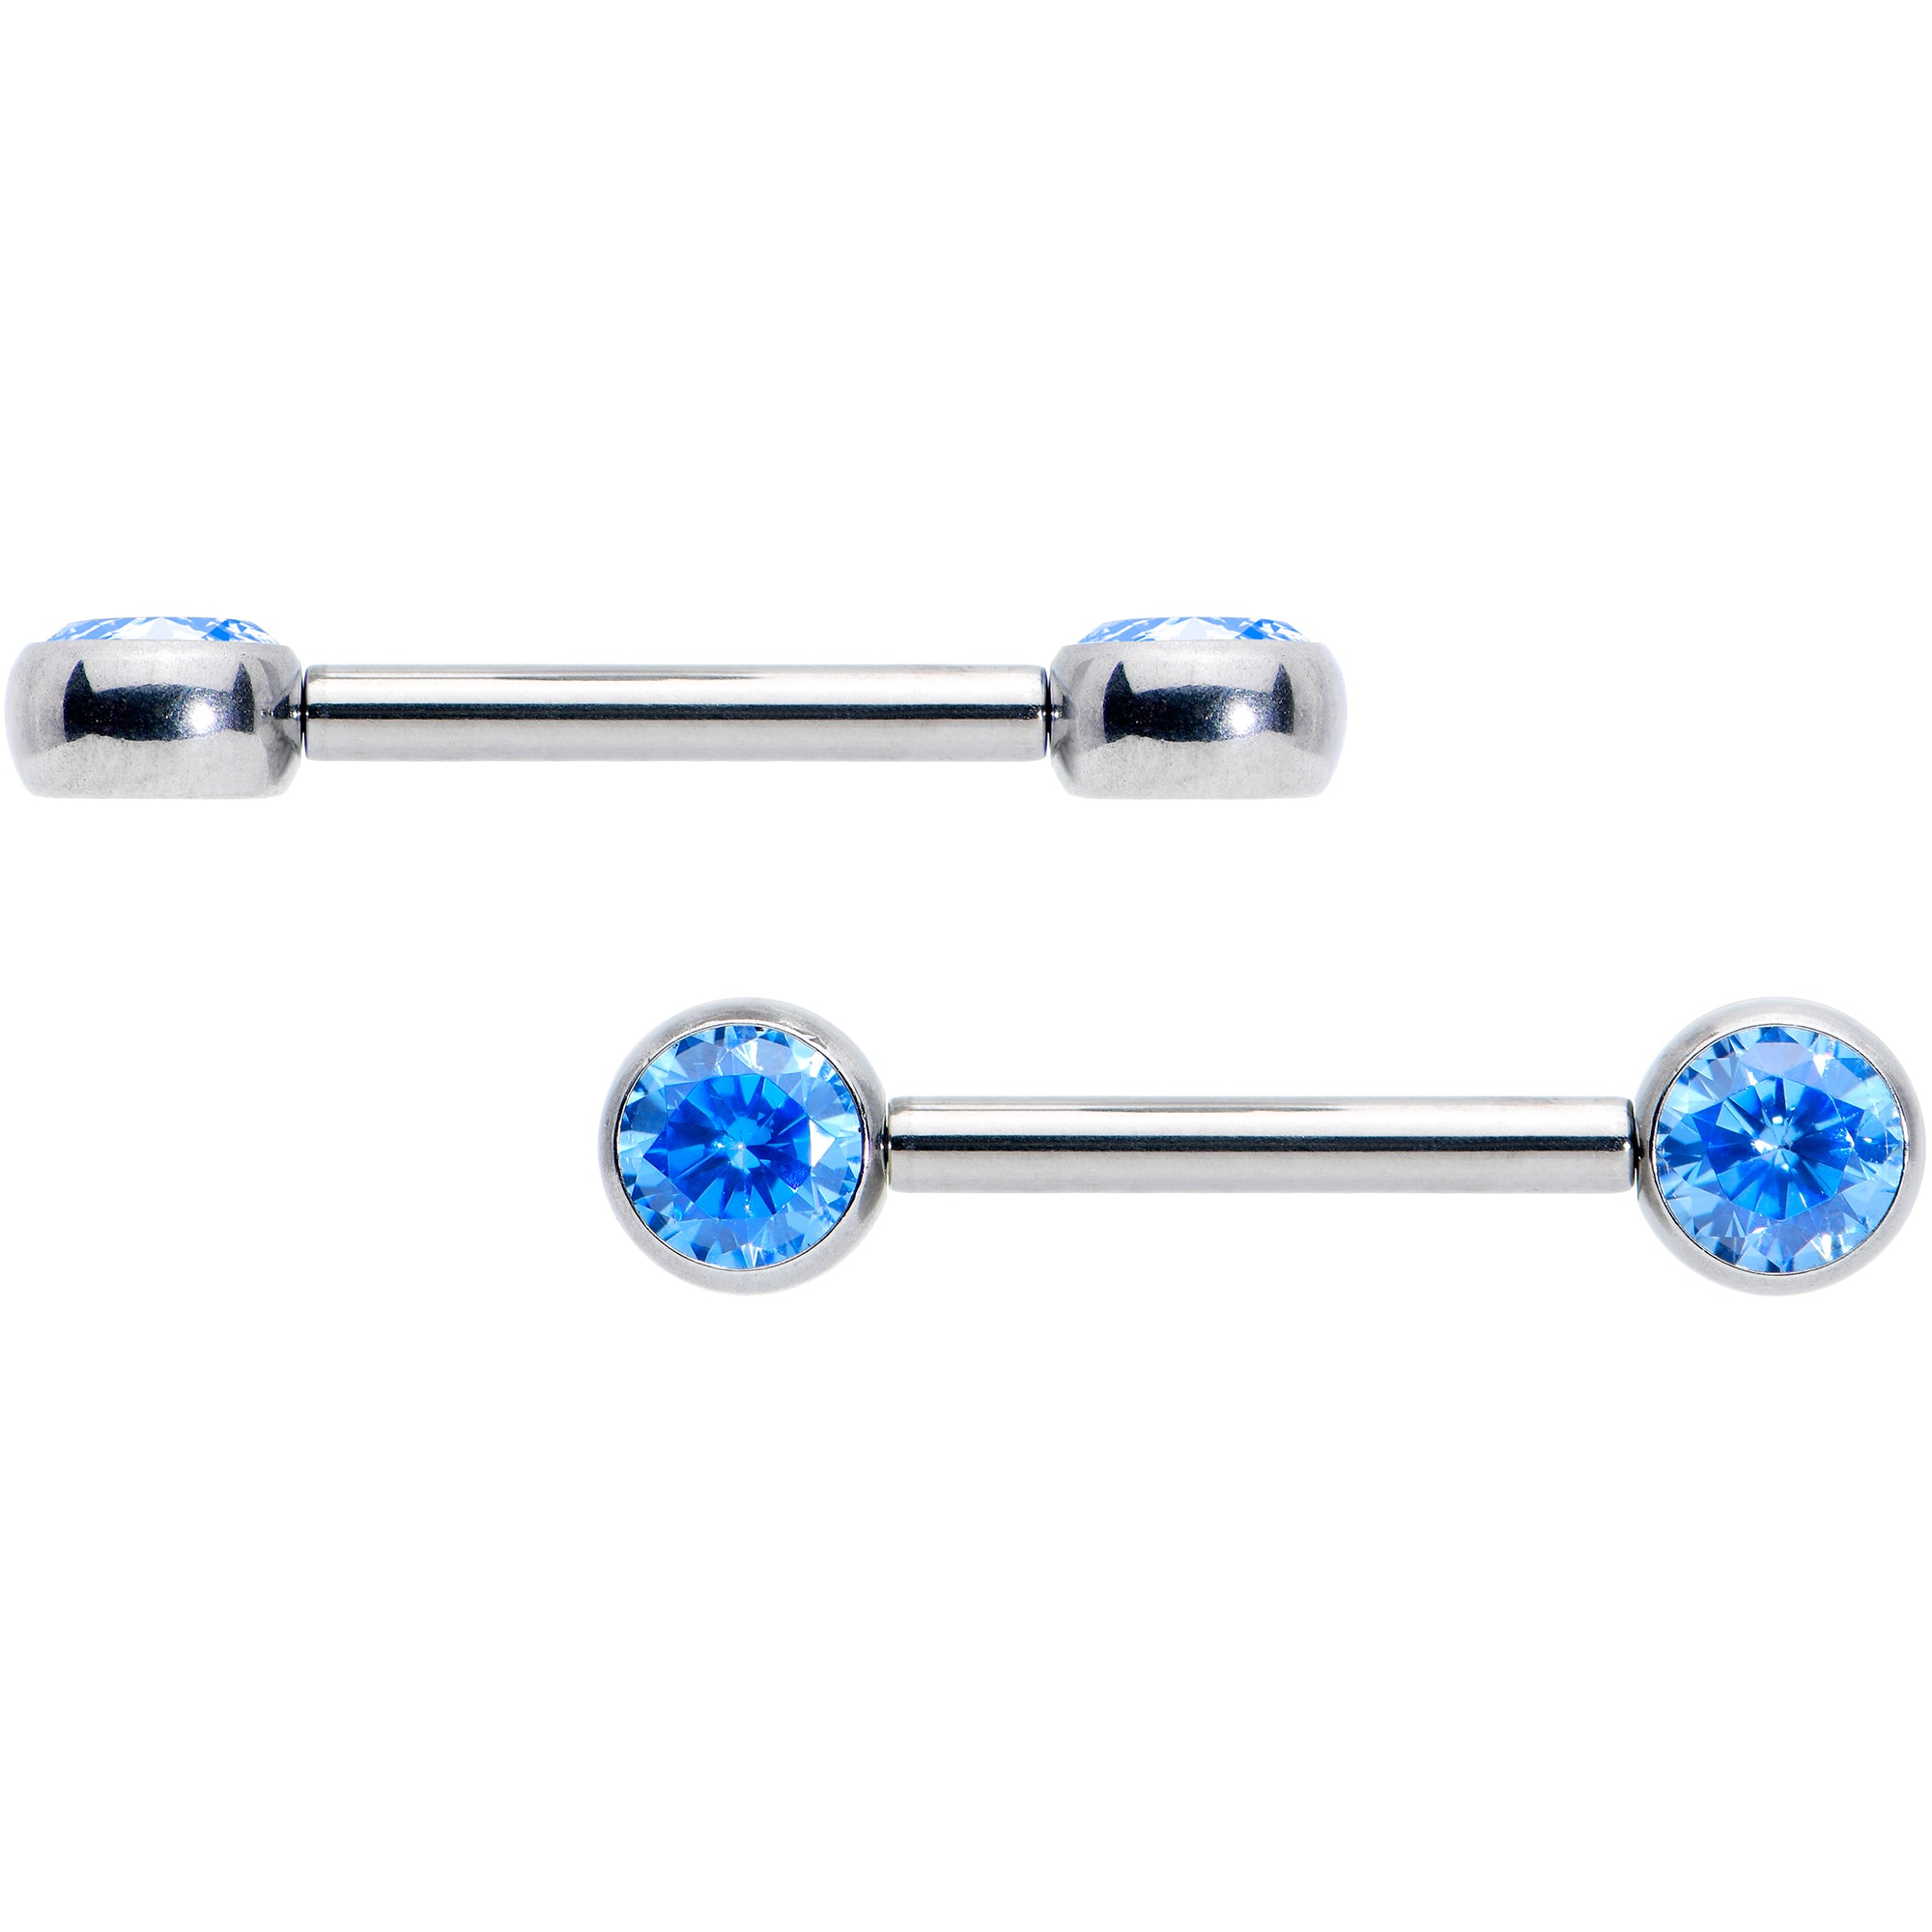 14 Gauge 1/2 Blue CZ Gem G23 Titanium Threadless Nipple Ring Set